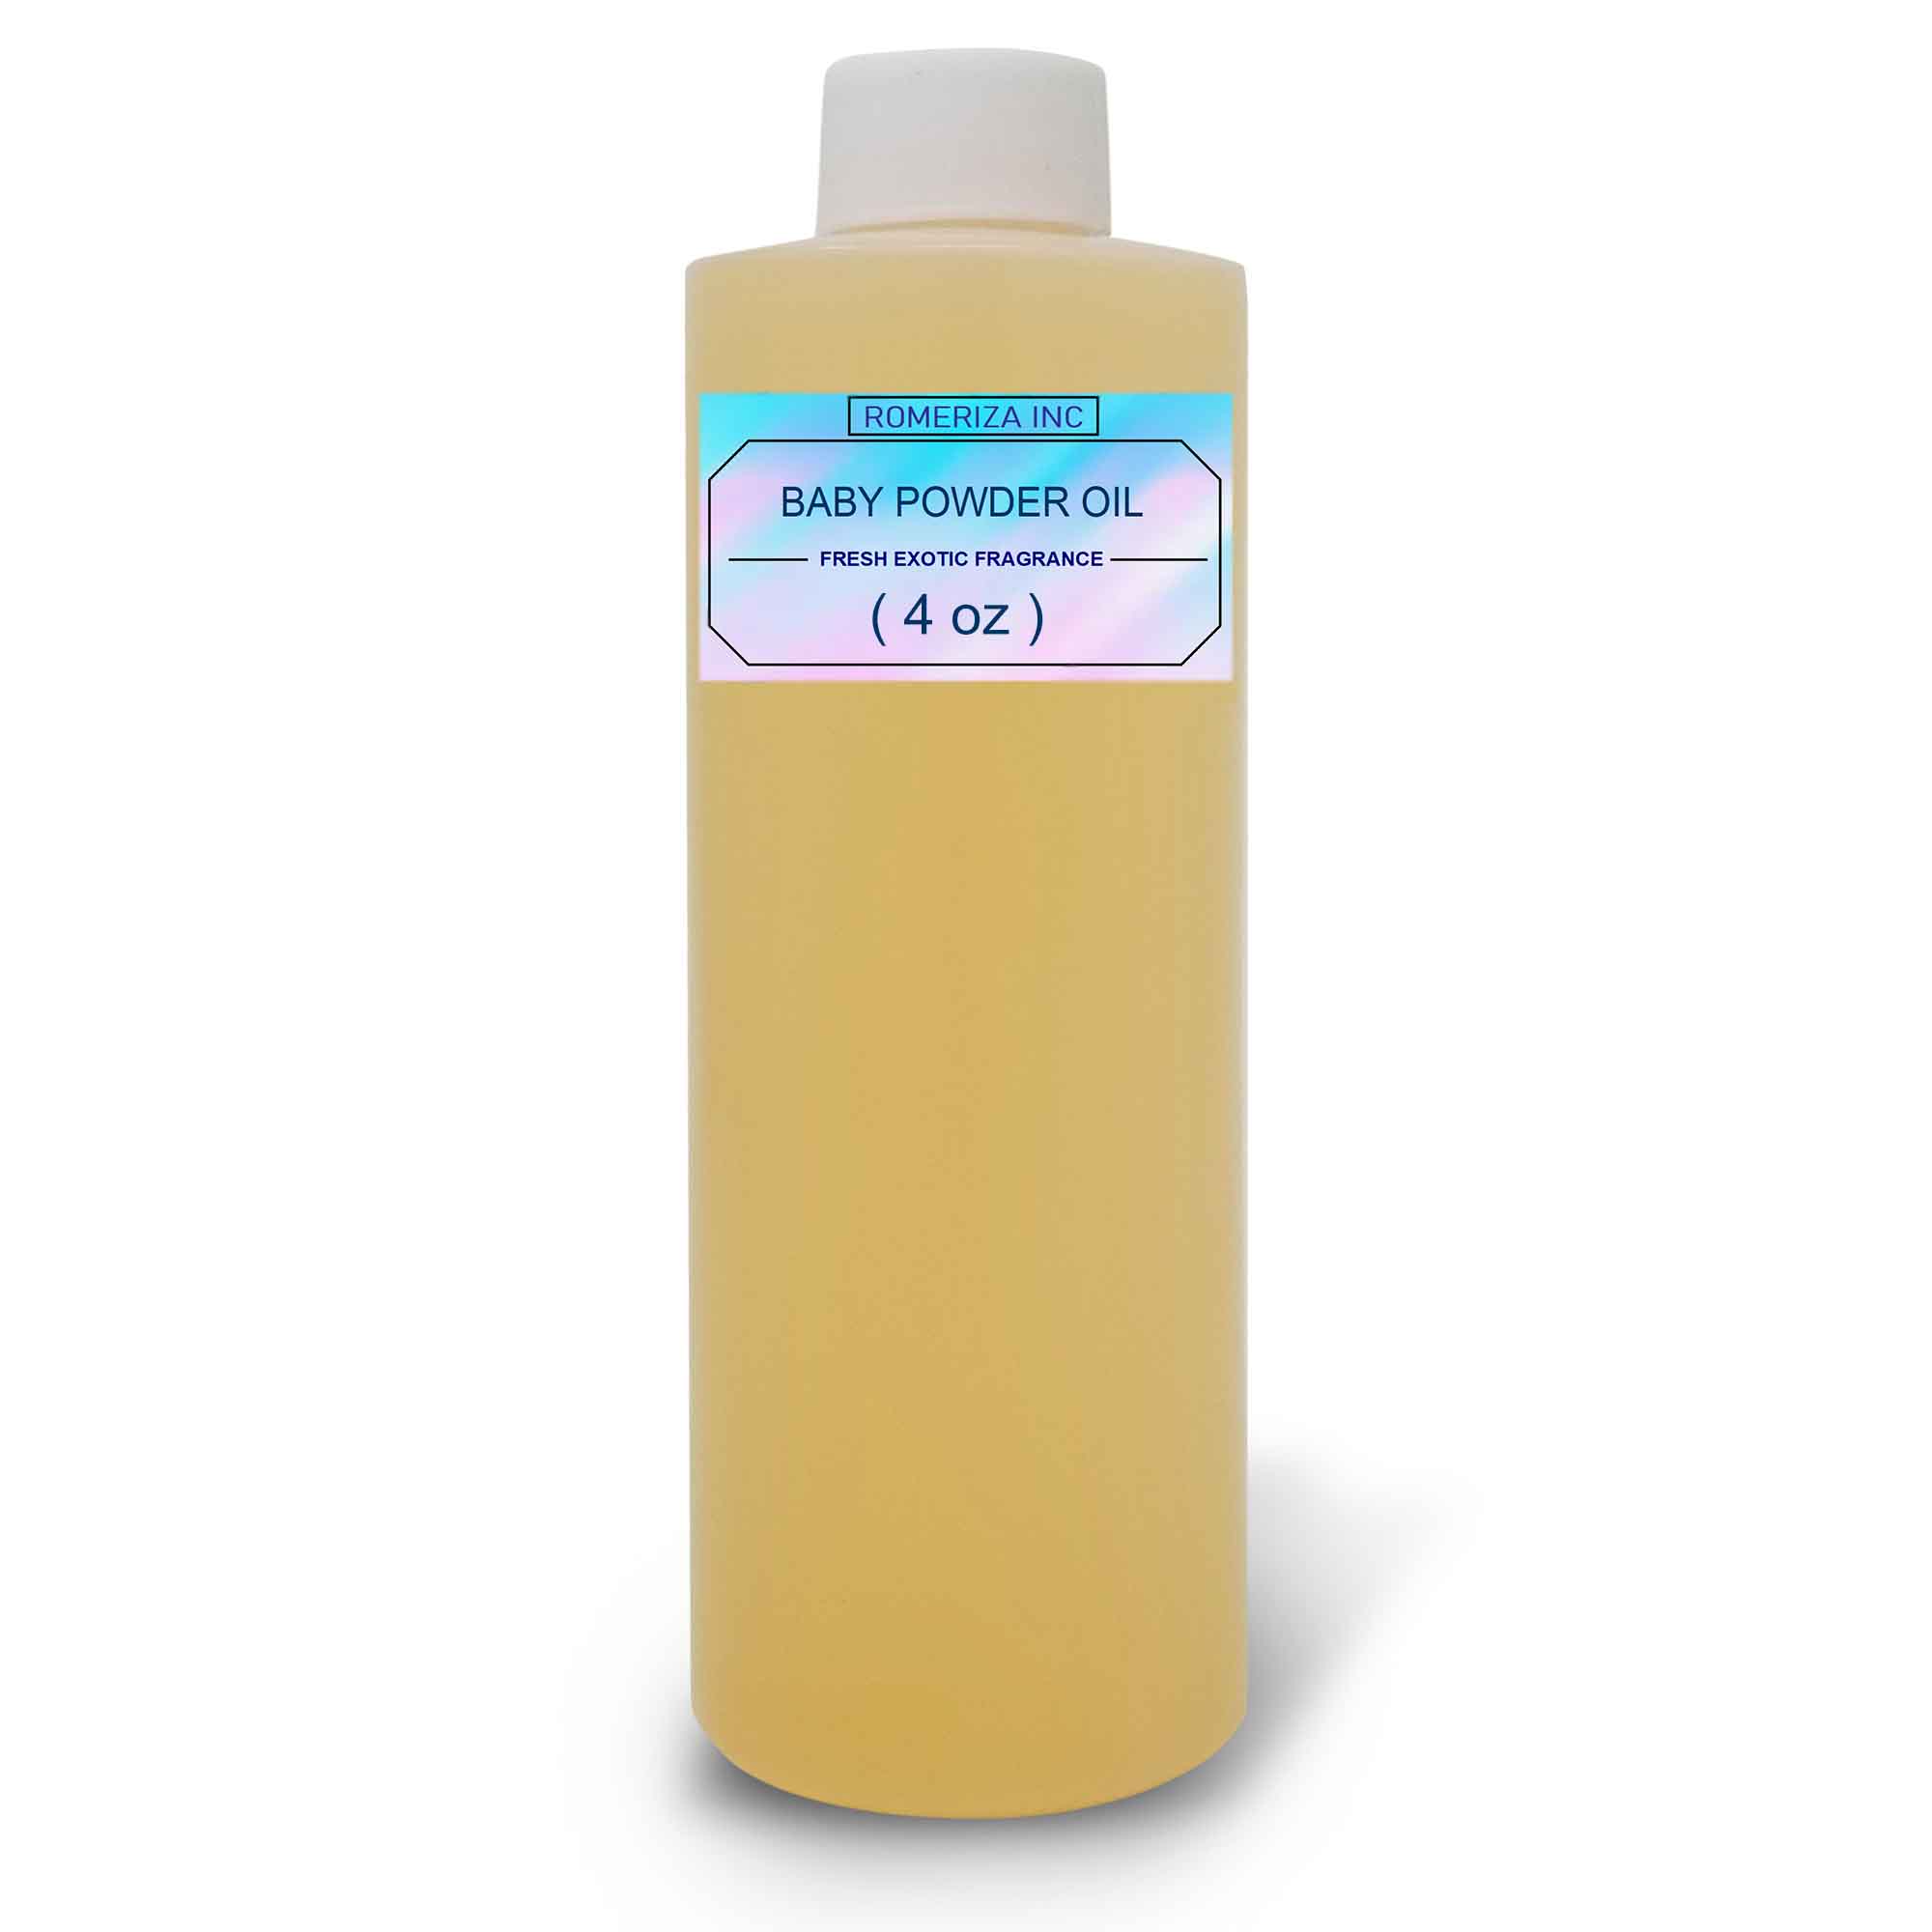 Nature's Oil Baby Powder Fragrance Oil | Michaels